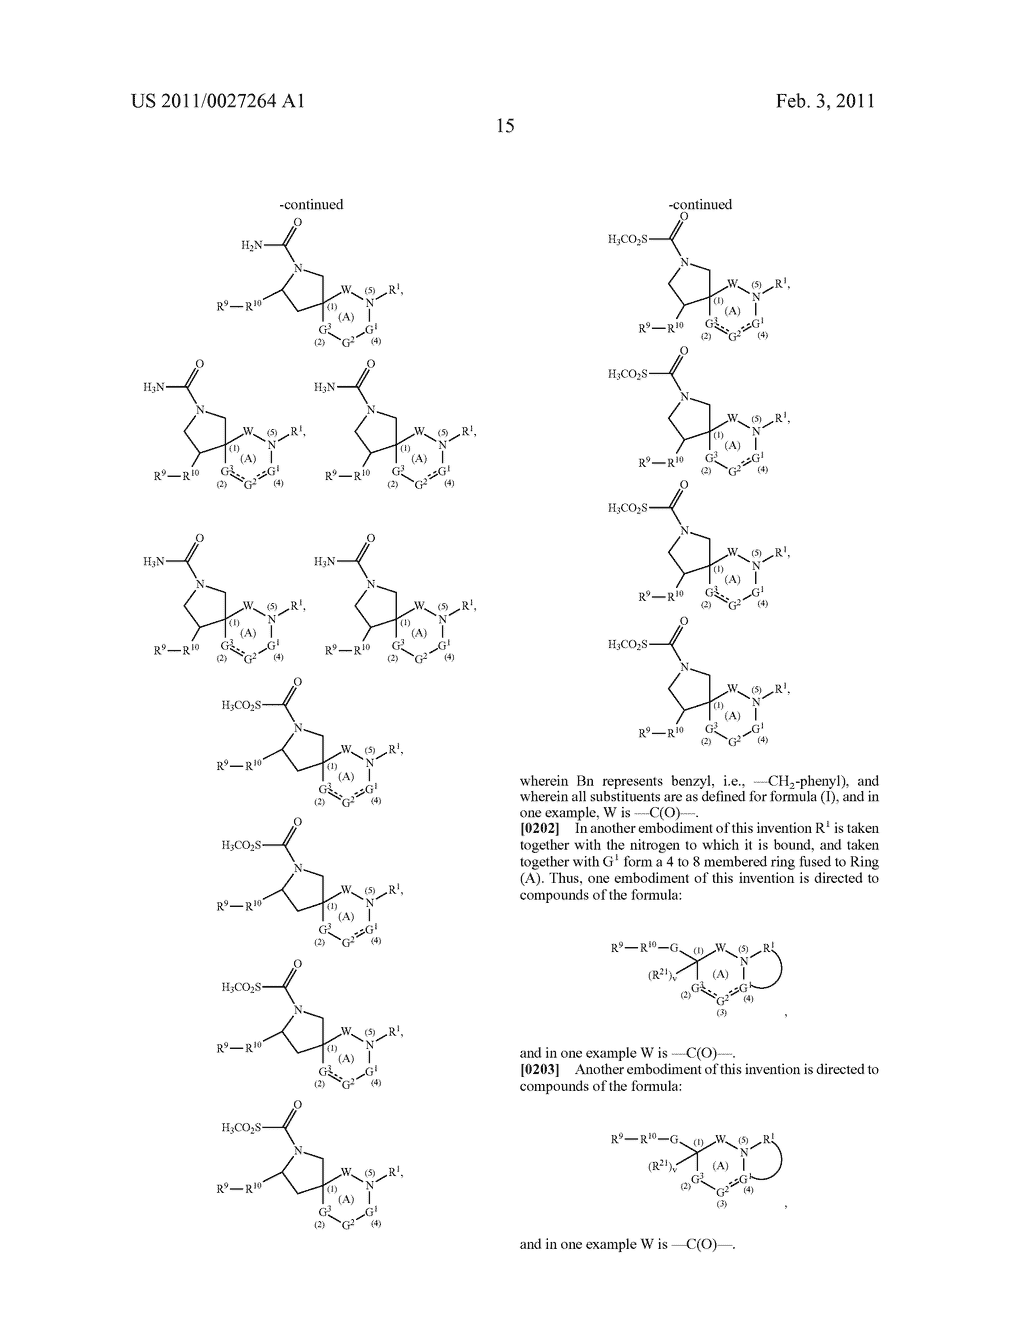 GAMMA SECRETASE MODULATORS FOR THE TREATMENT OF ALZHEIMER'S DISEASE - diagram, schematic, and image 16